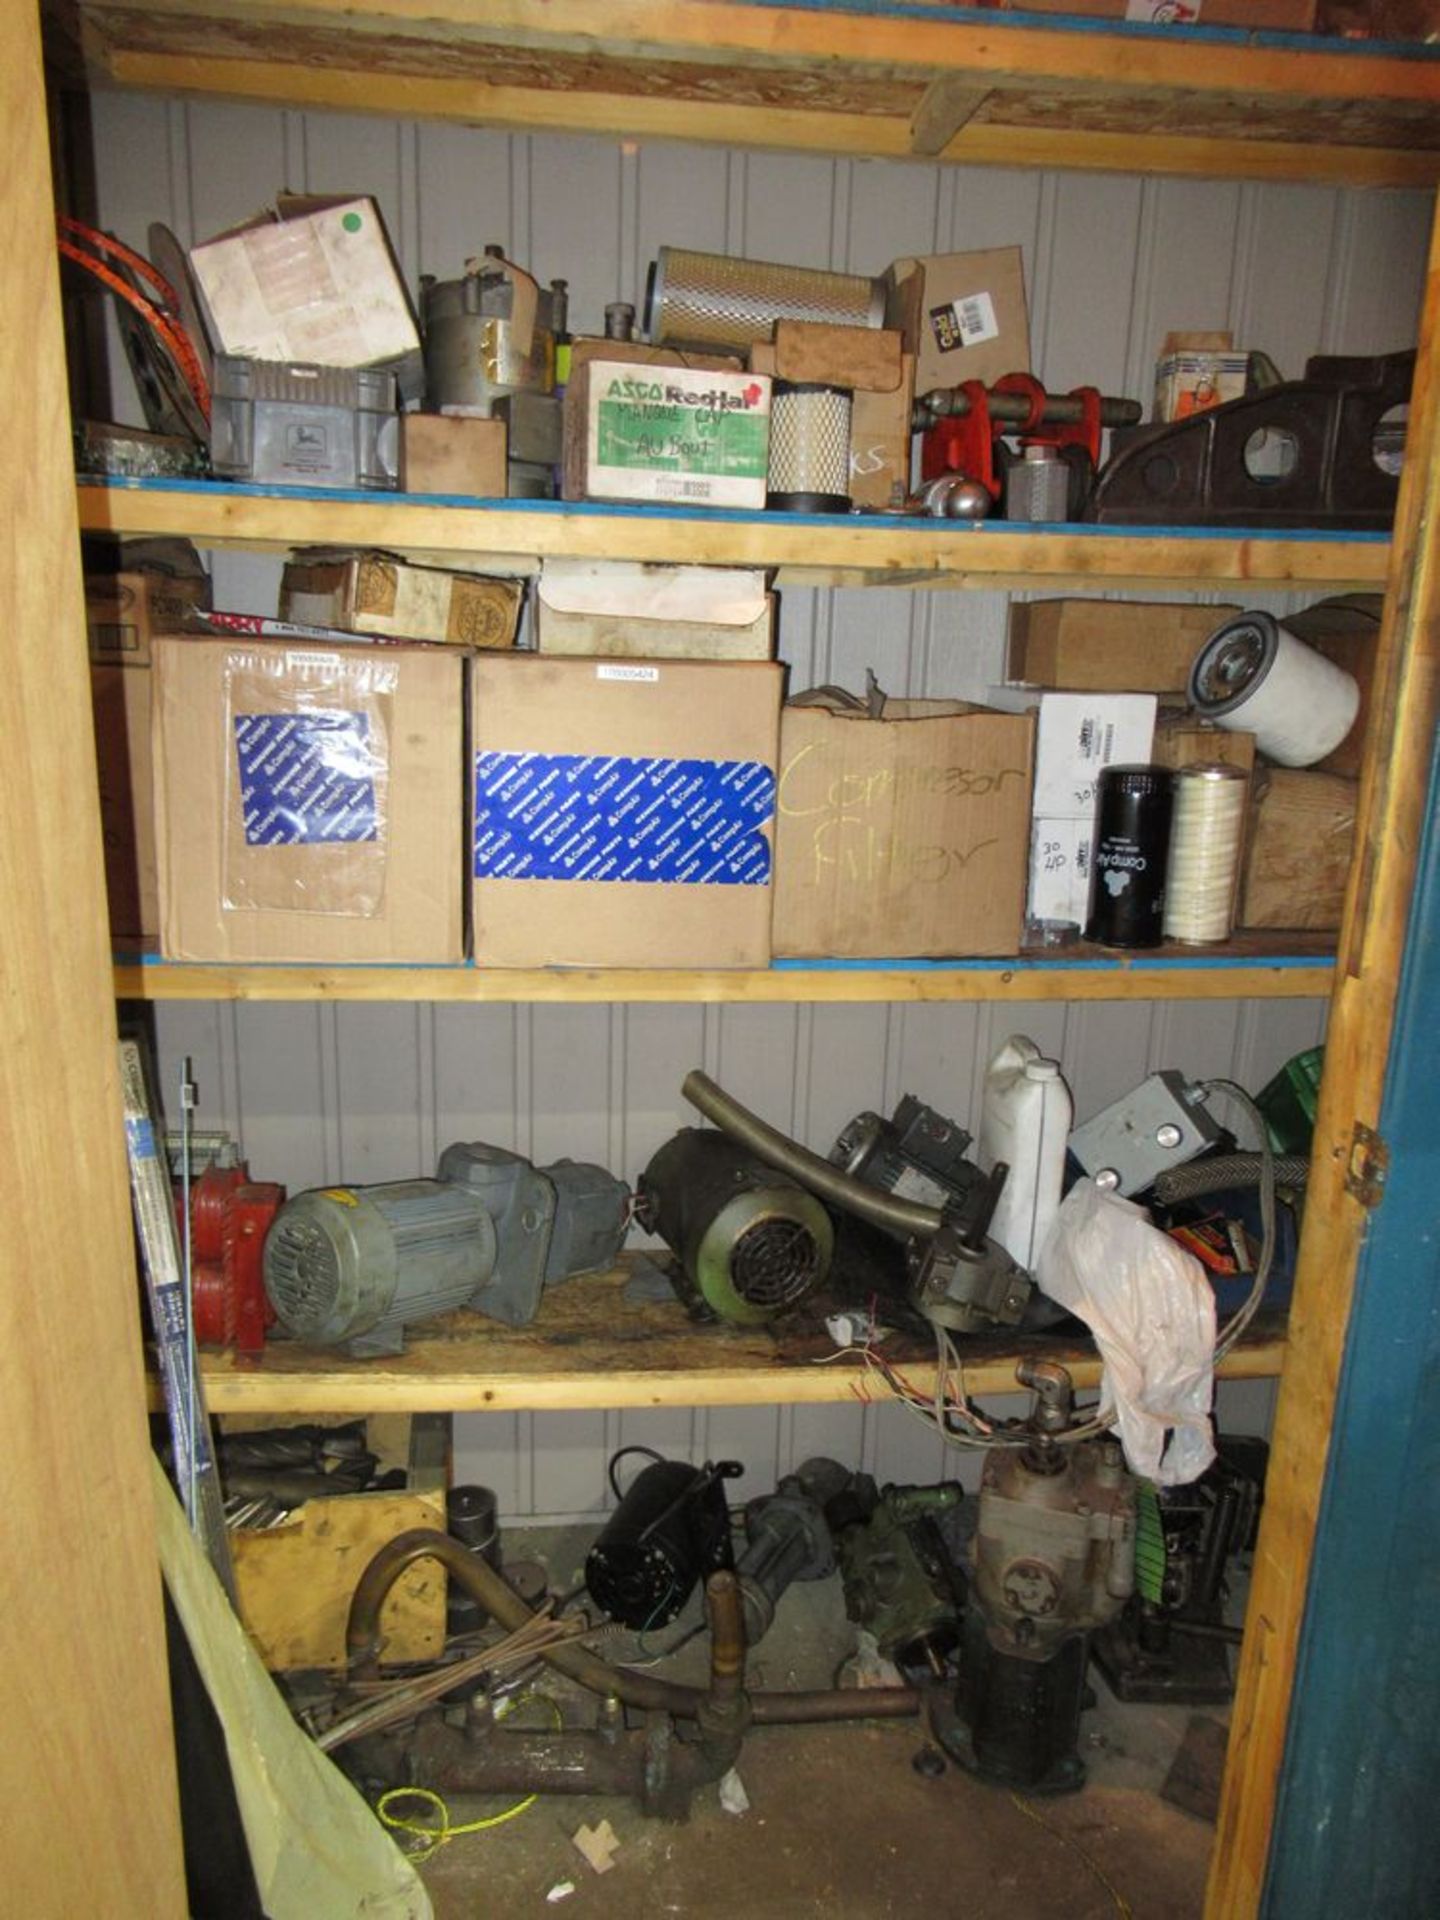 Contents Of Room Under Stairway Pumps, Motors, Filters, Assorted Repair Parts